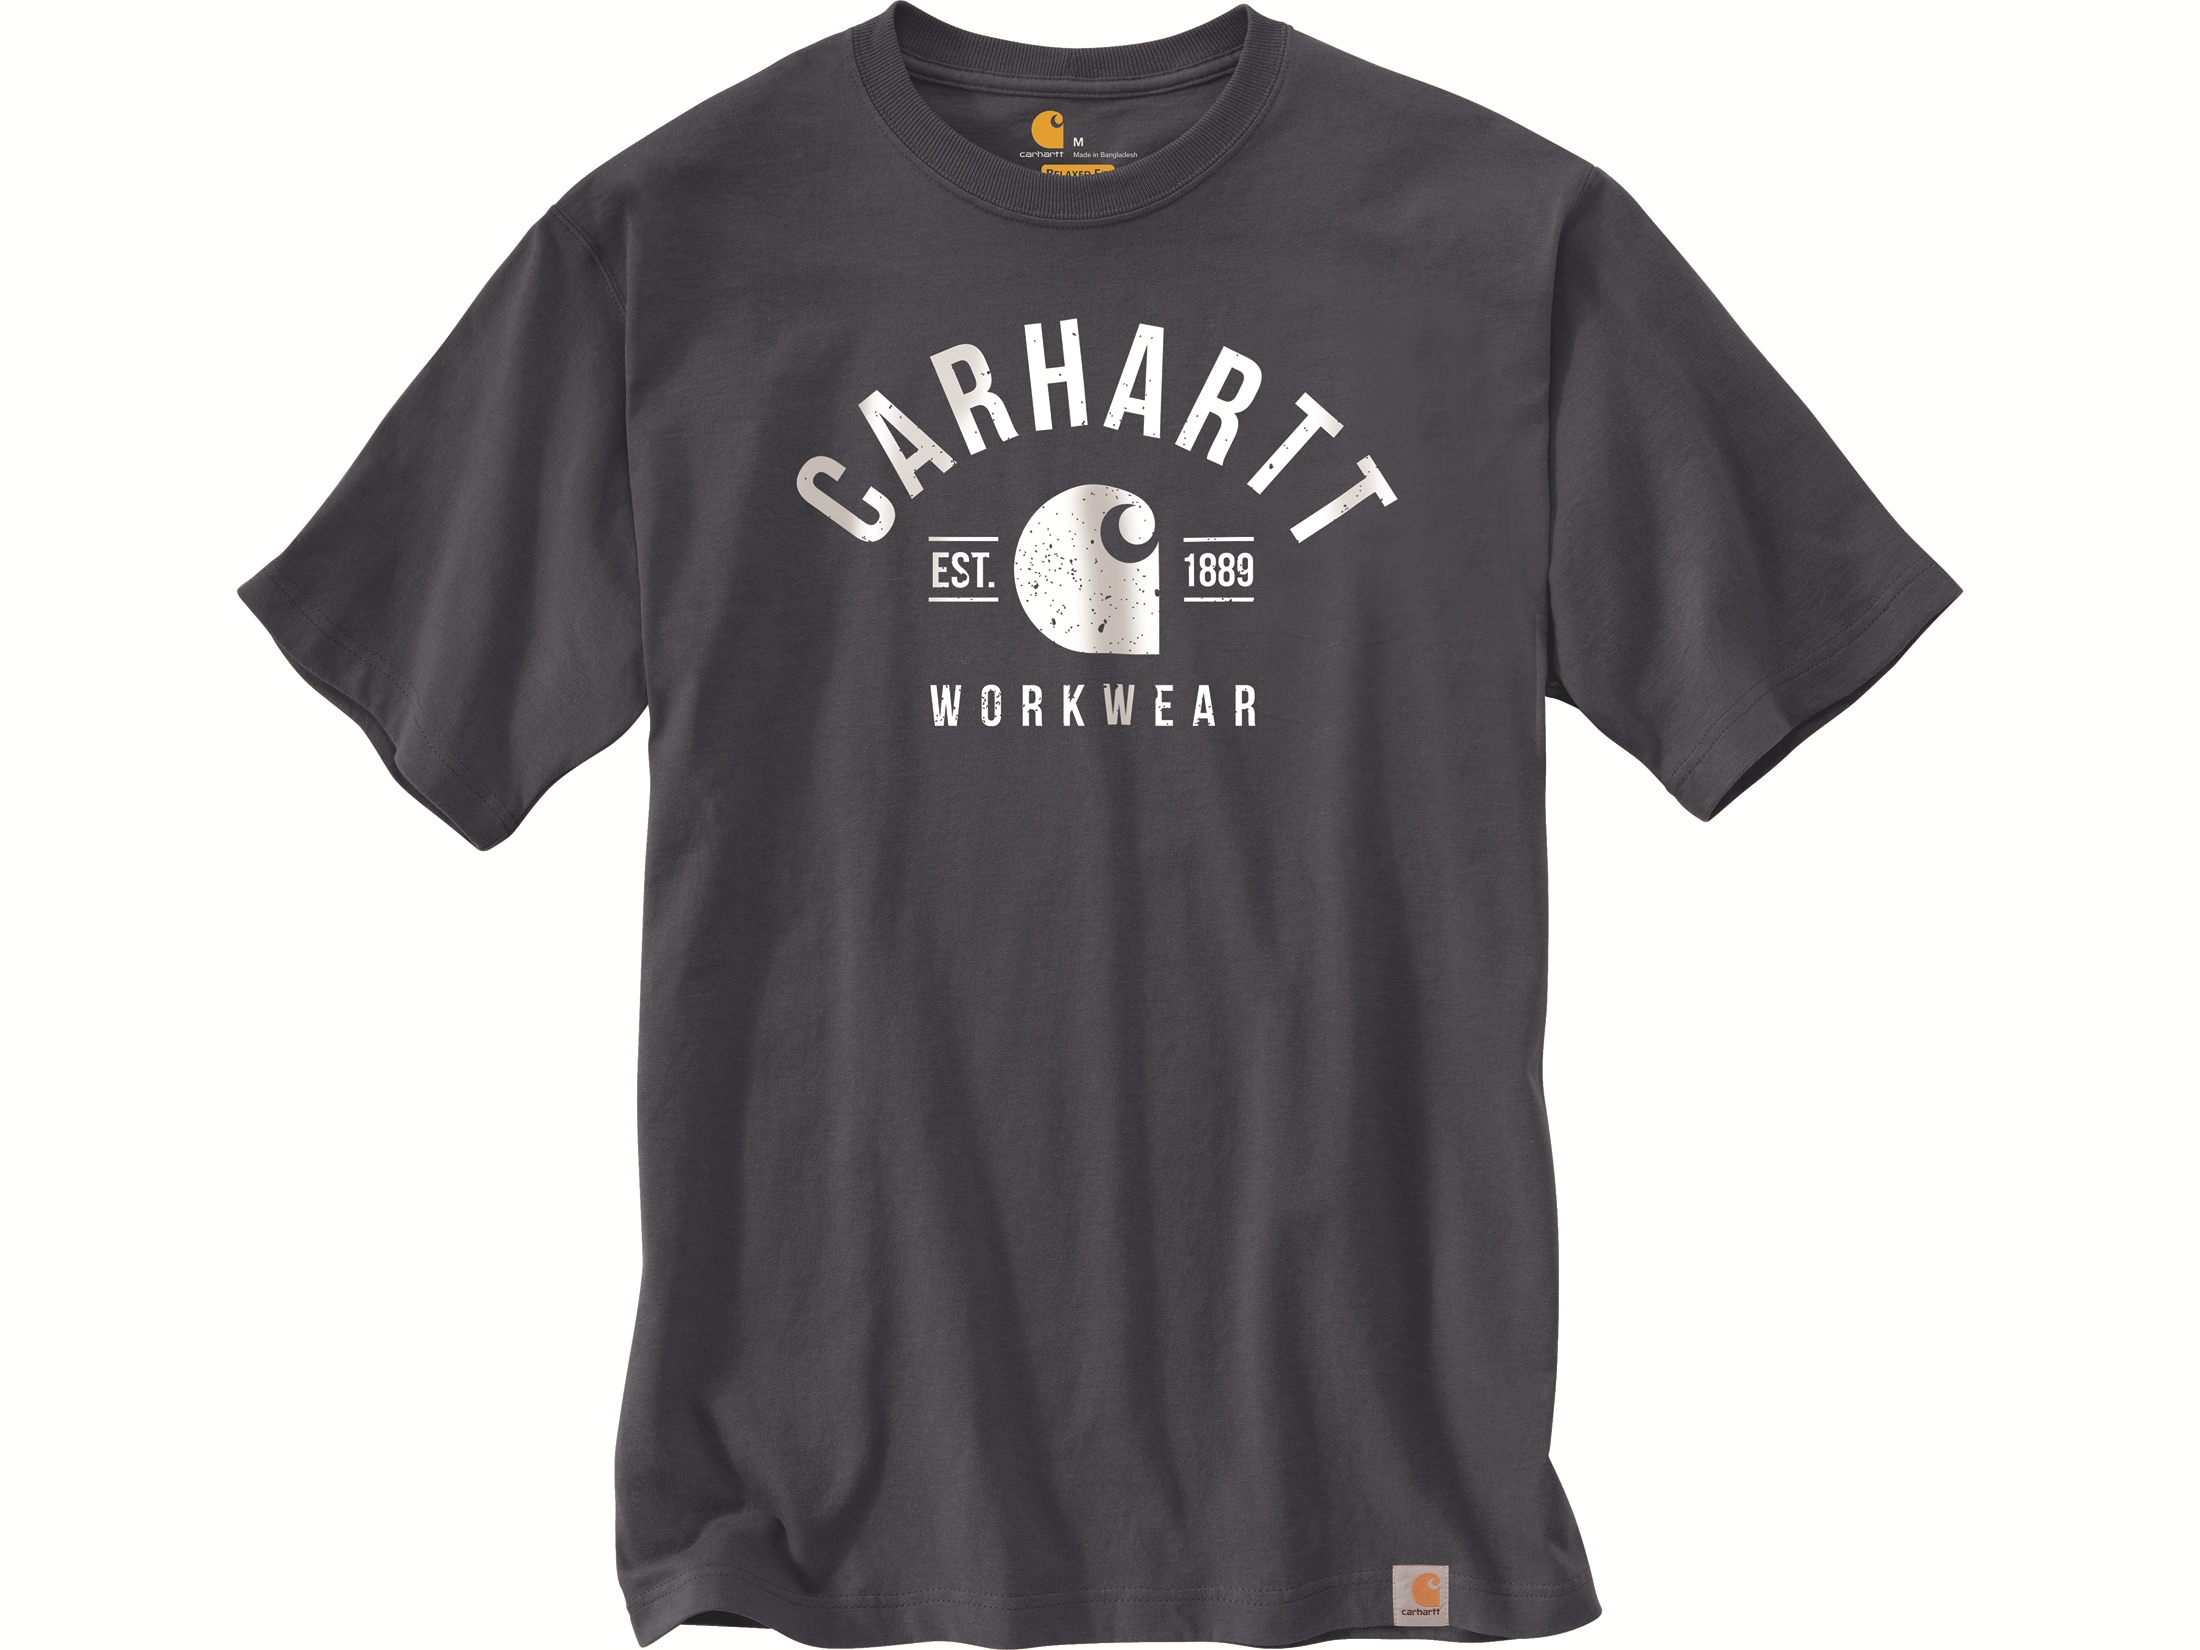 Carhartt Men's Relaxed Fit Heavyweight workwear Graphic Short Sleeve